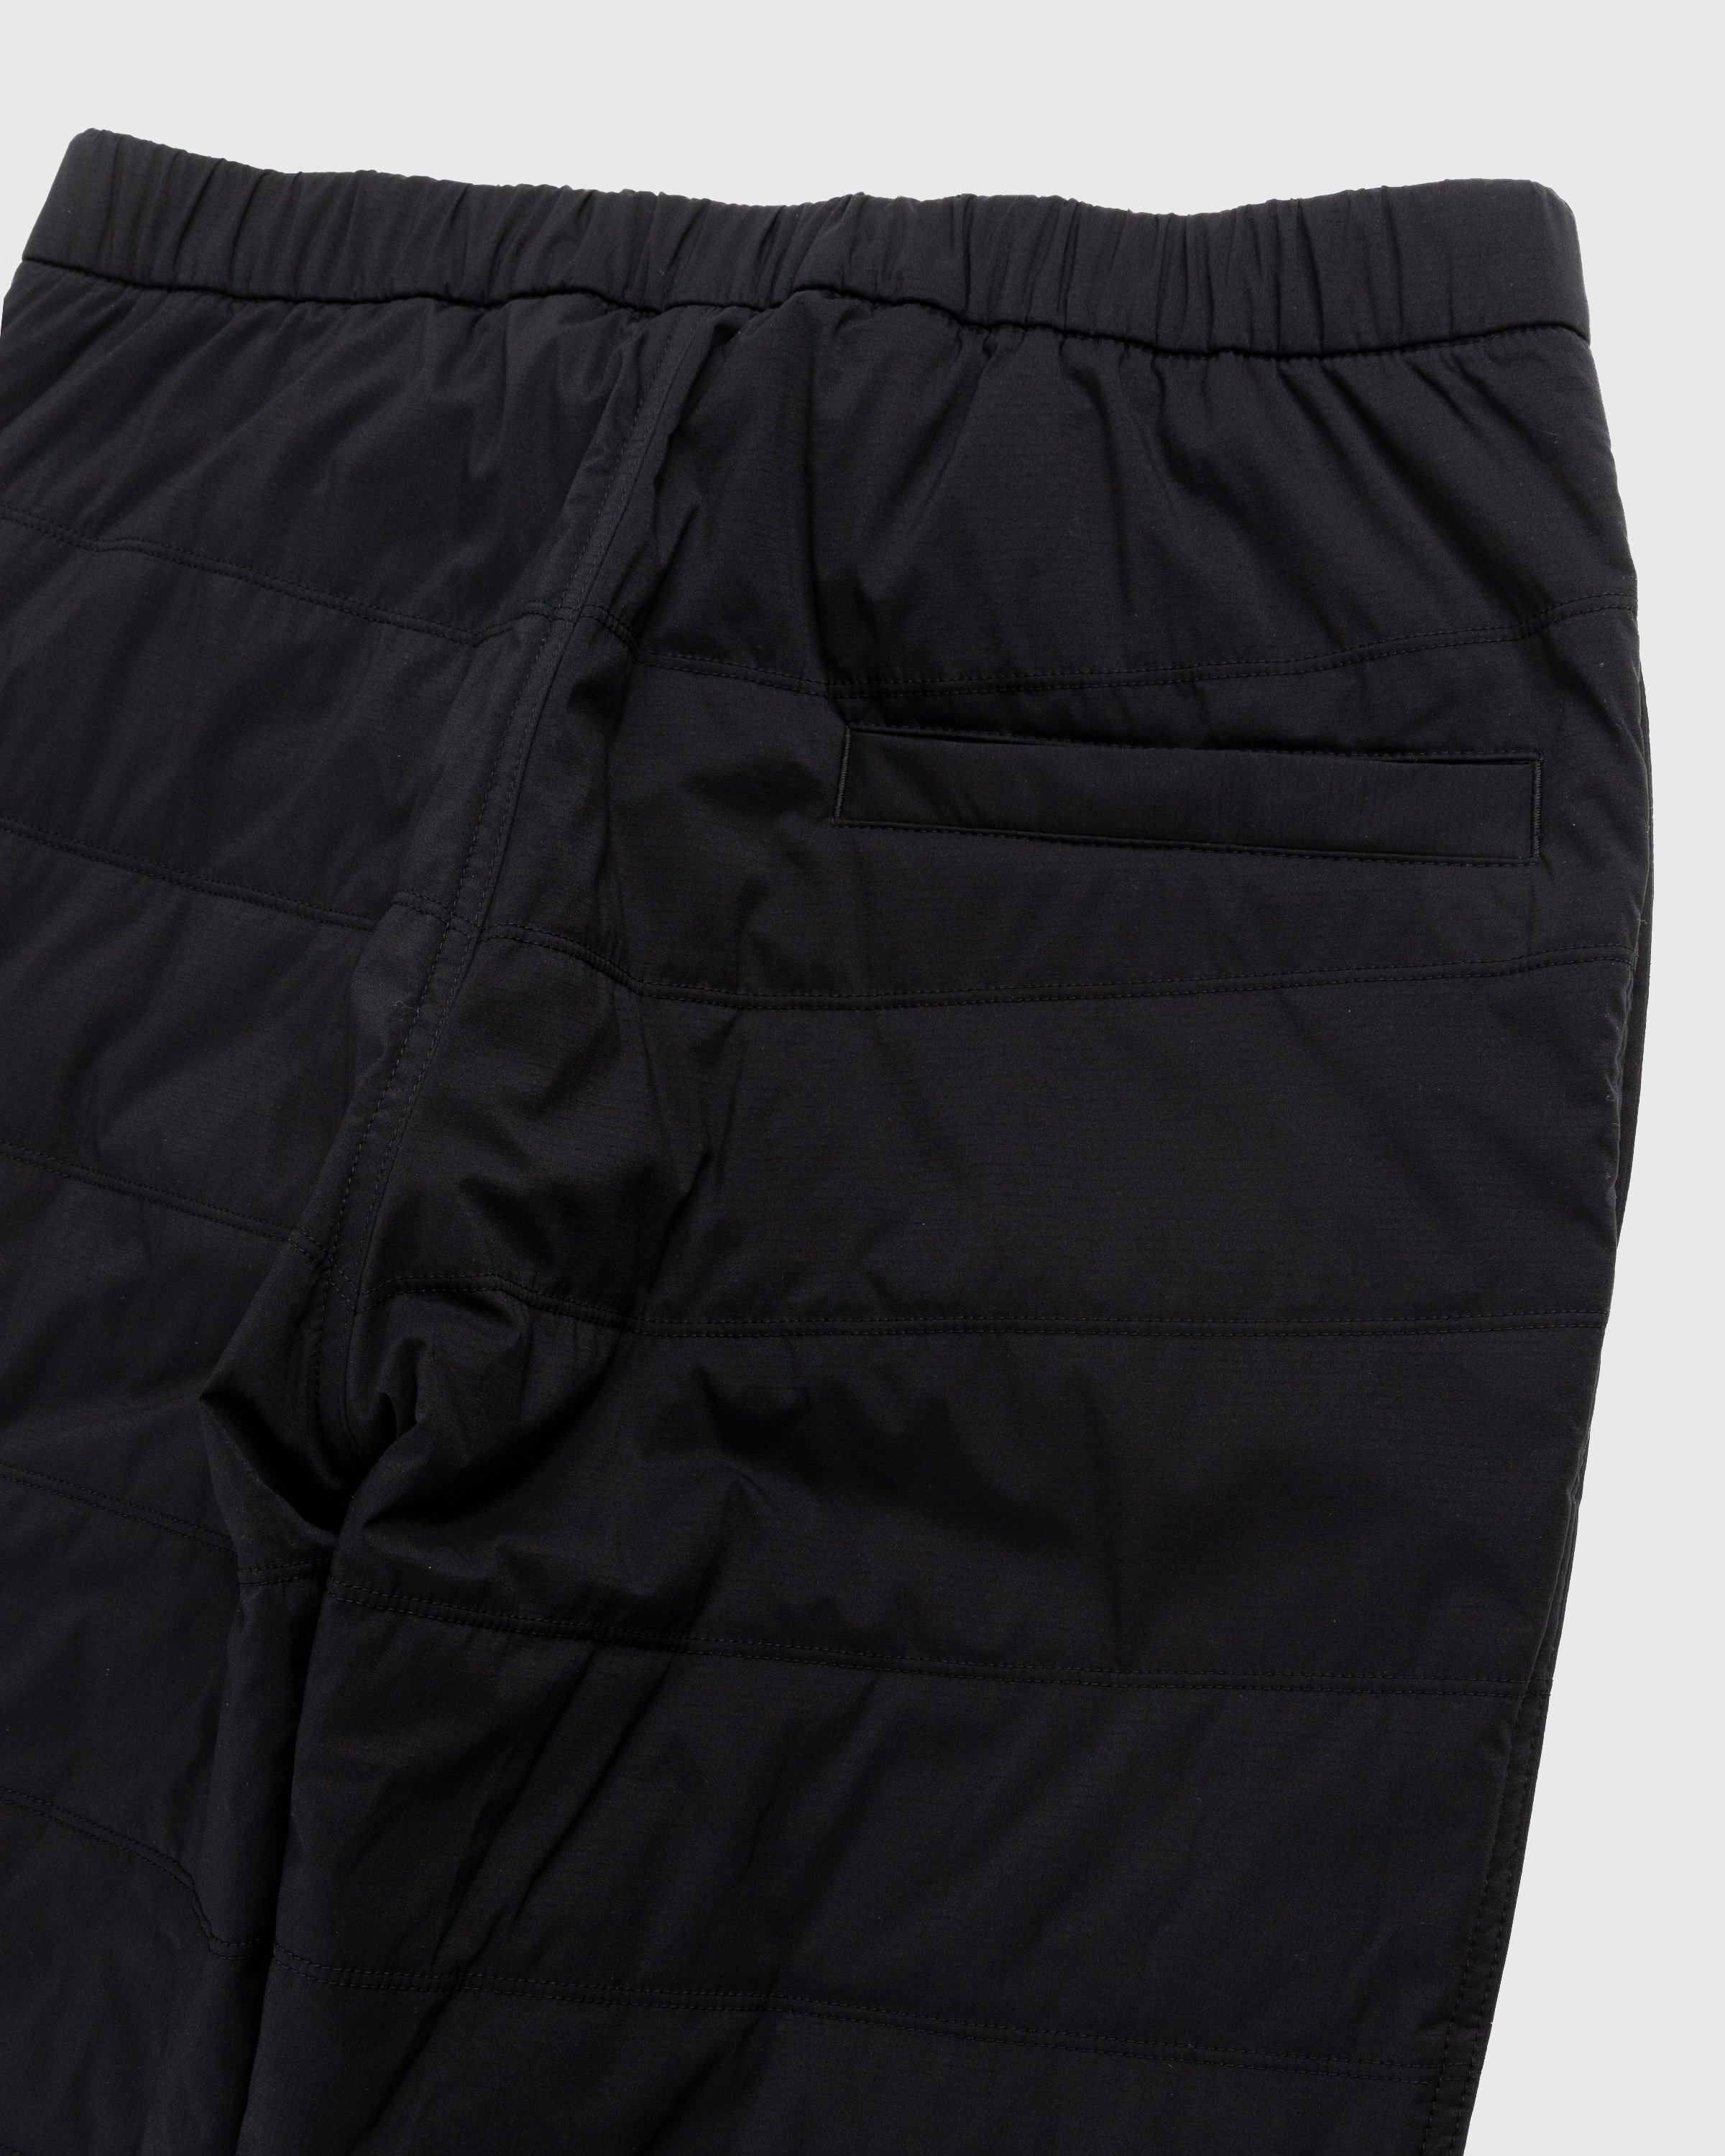 Snow Peak – Flexible Insulated Pants Black - Active Pants - Black - Image 3